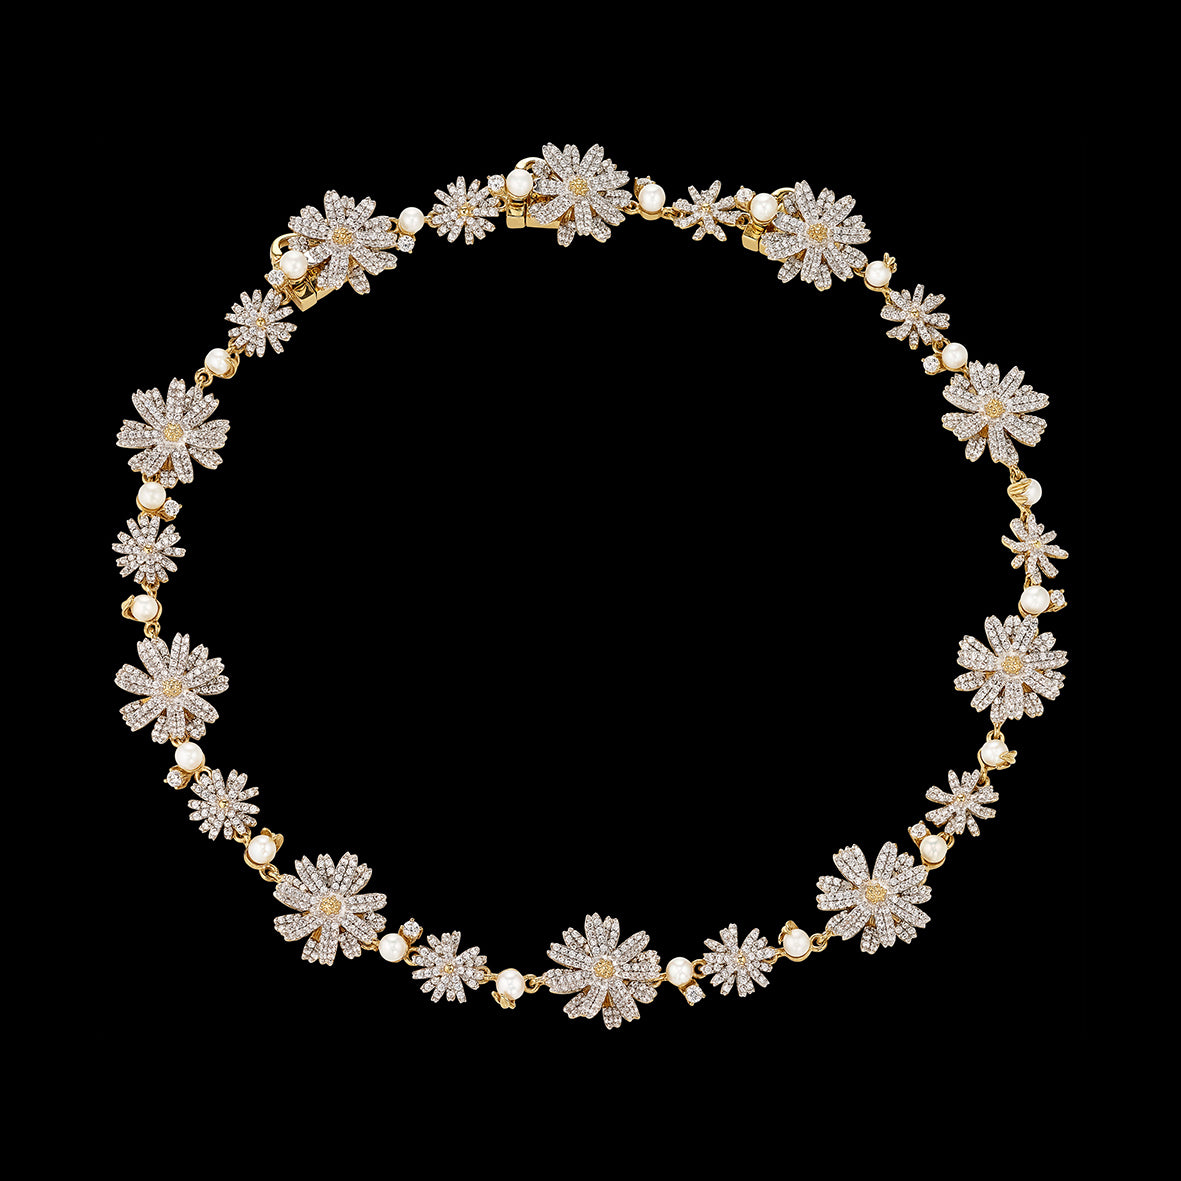 9ct Rose Gold Diamond Daisy Necklace